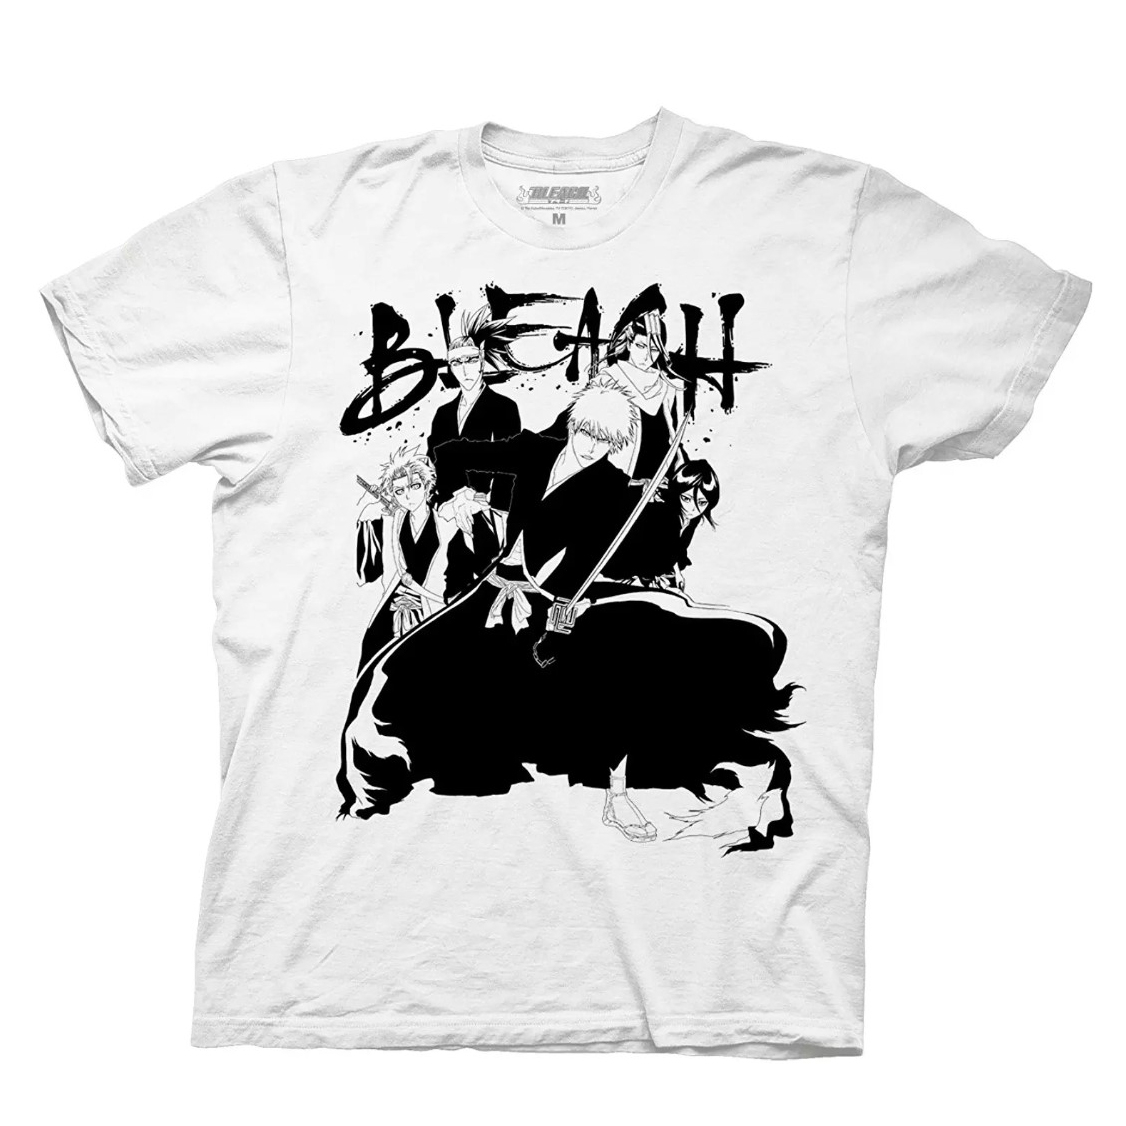 Bleach Characters Print T-Shirt